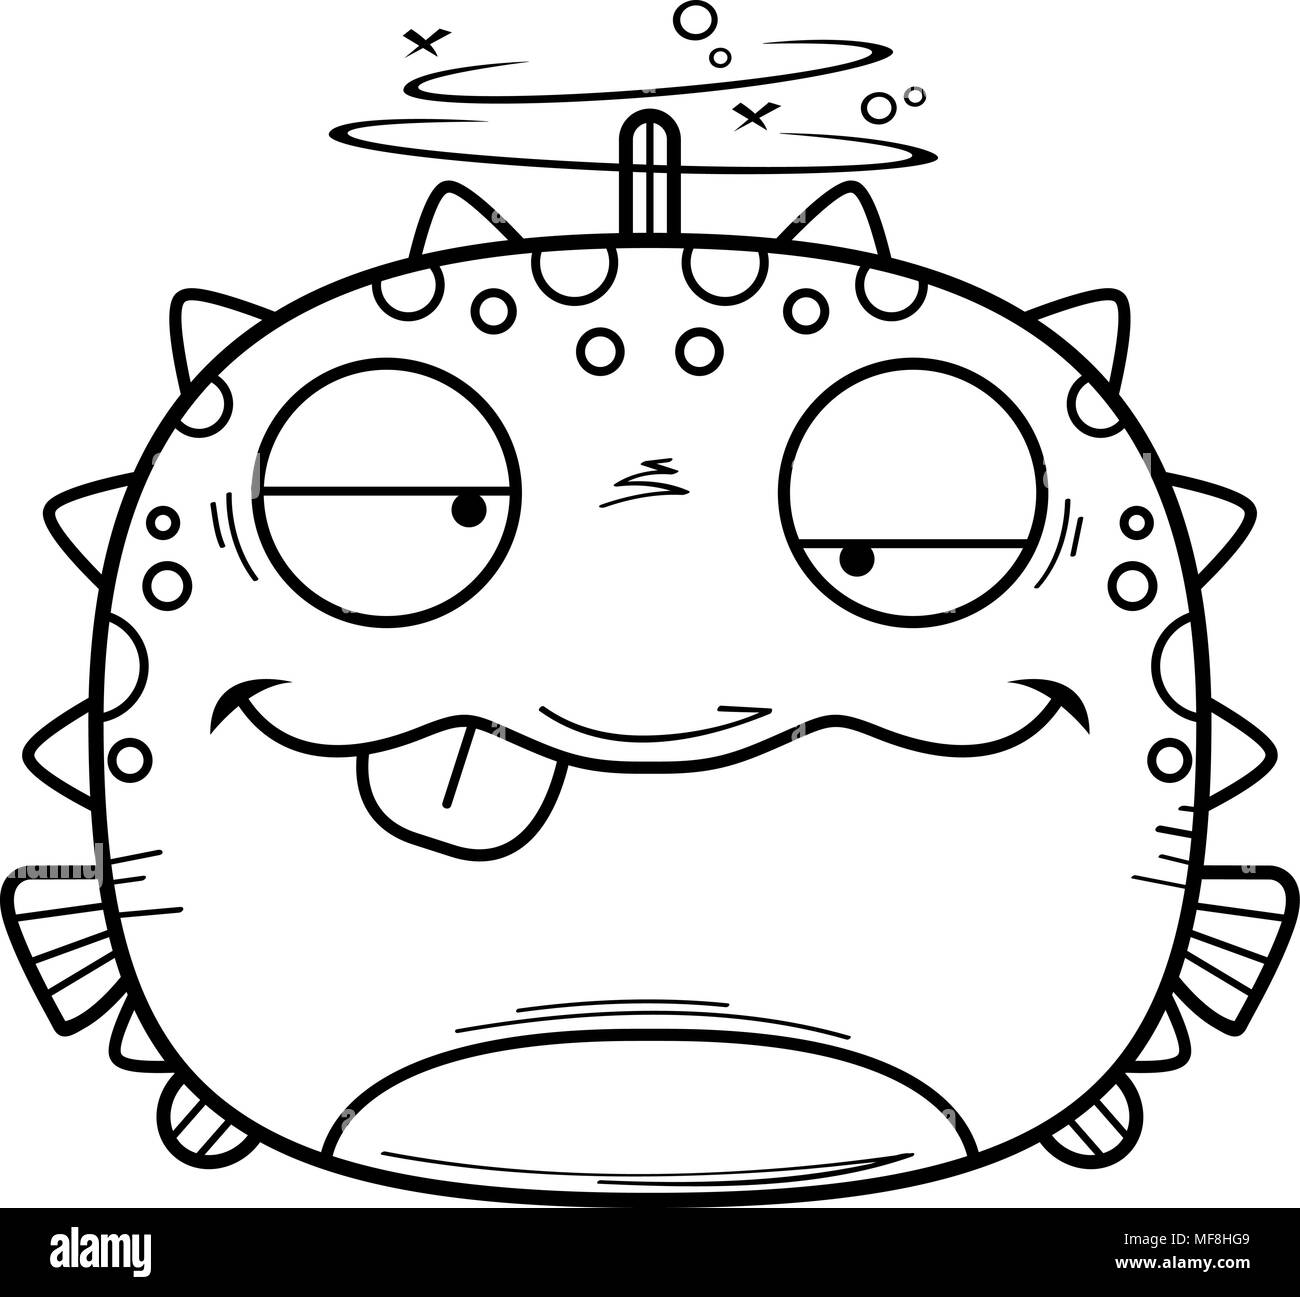 A cartoon illustration of a blowfish looking drunk. Stock Vector